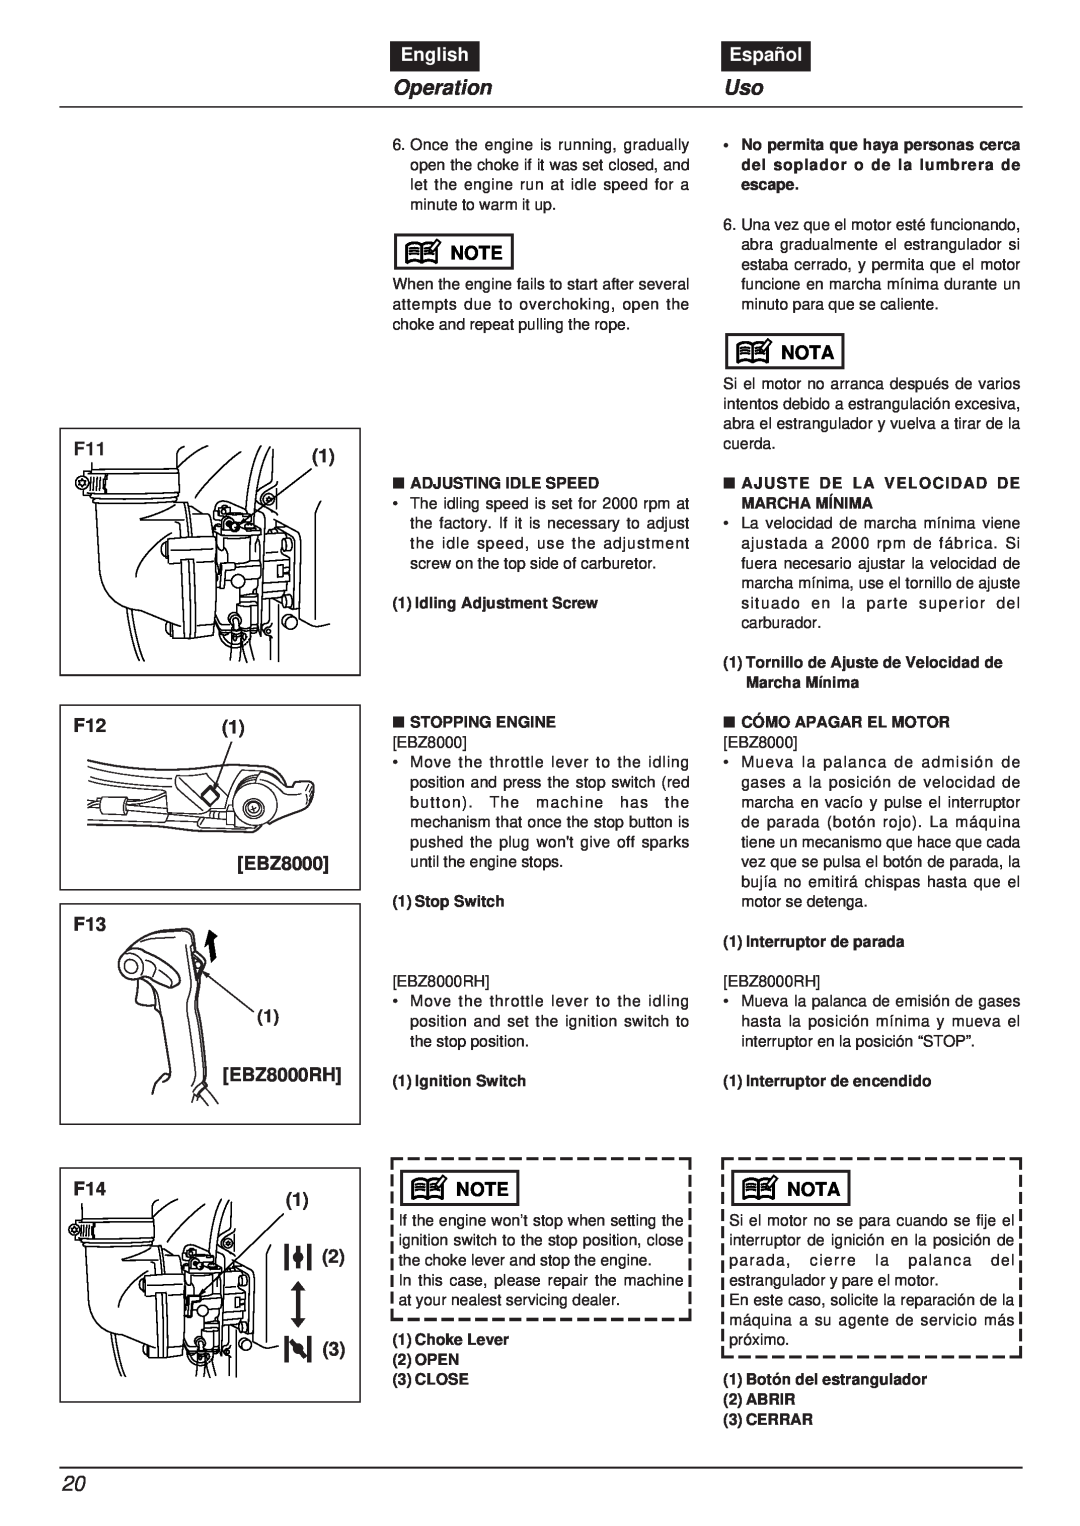 RedMax EBZ8000RH manual Operation, English, Español, Nota 